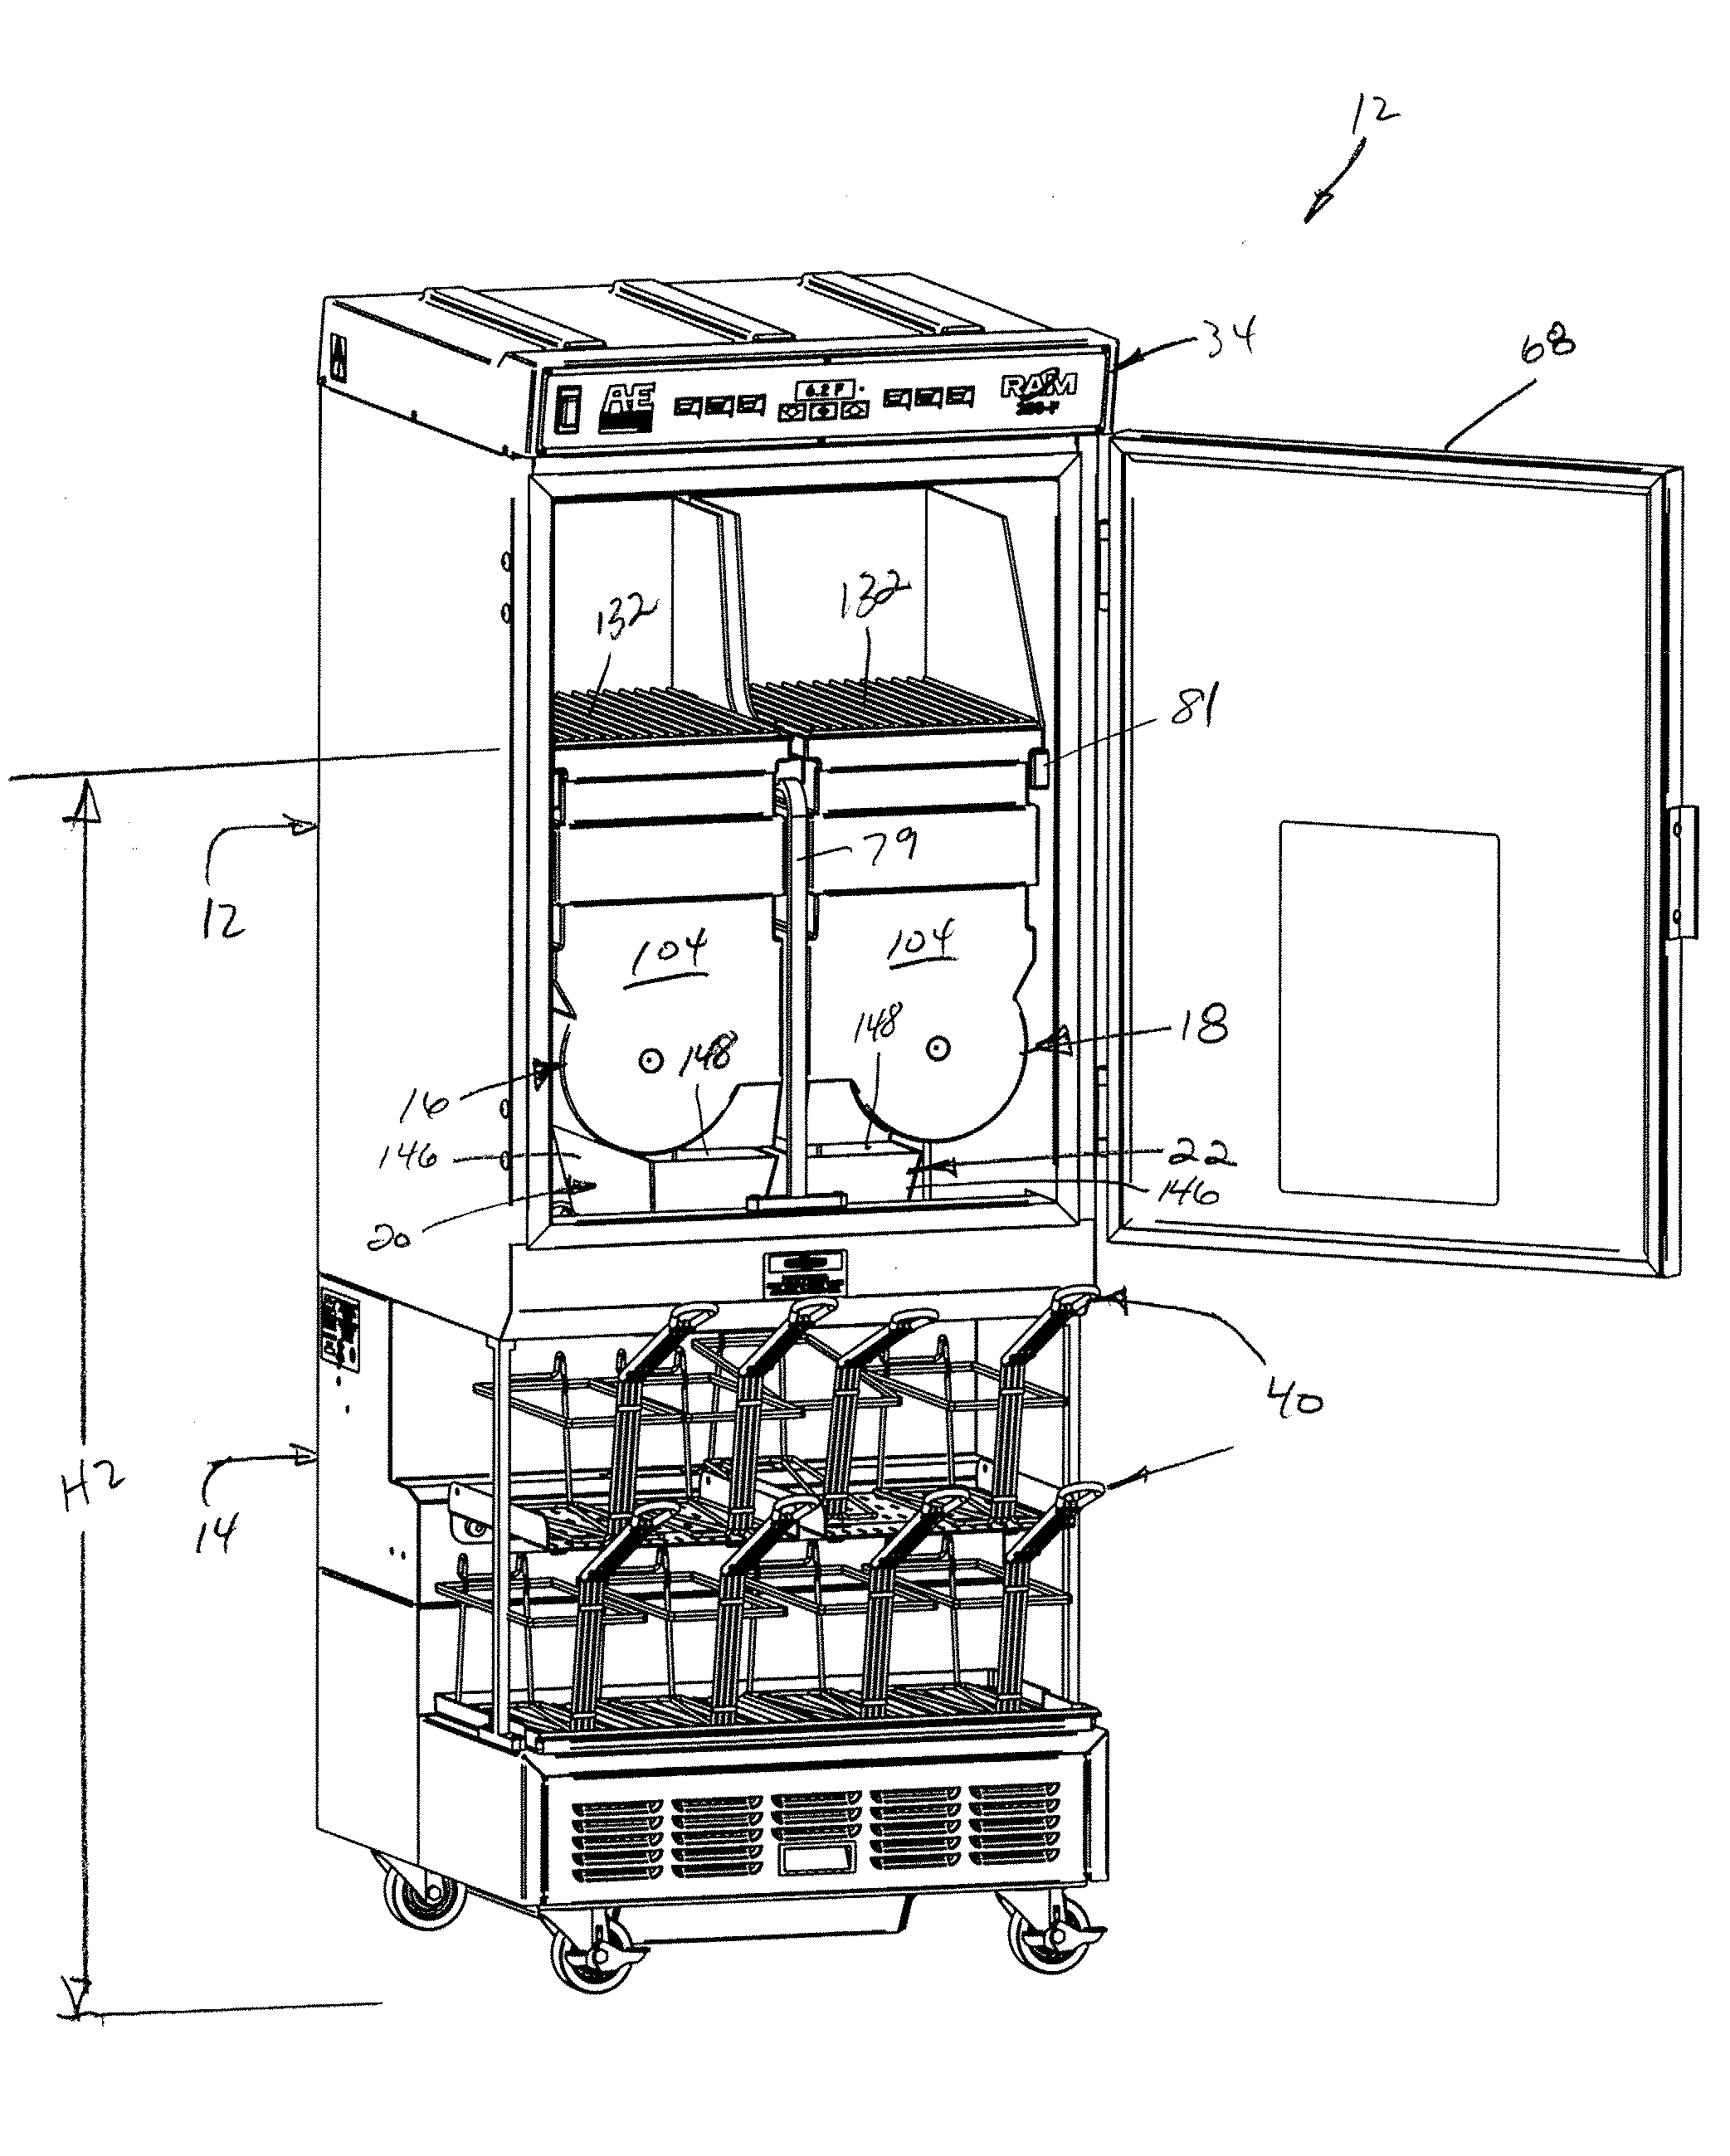 Dual hopper frozen food dispenser and methods